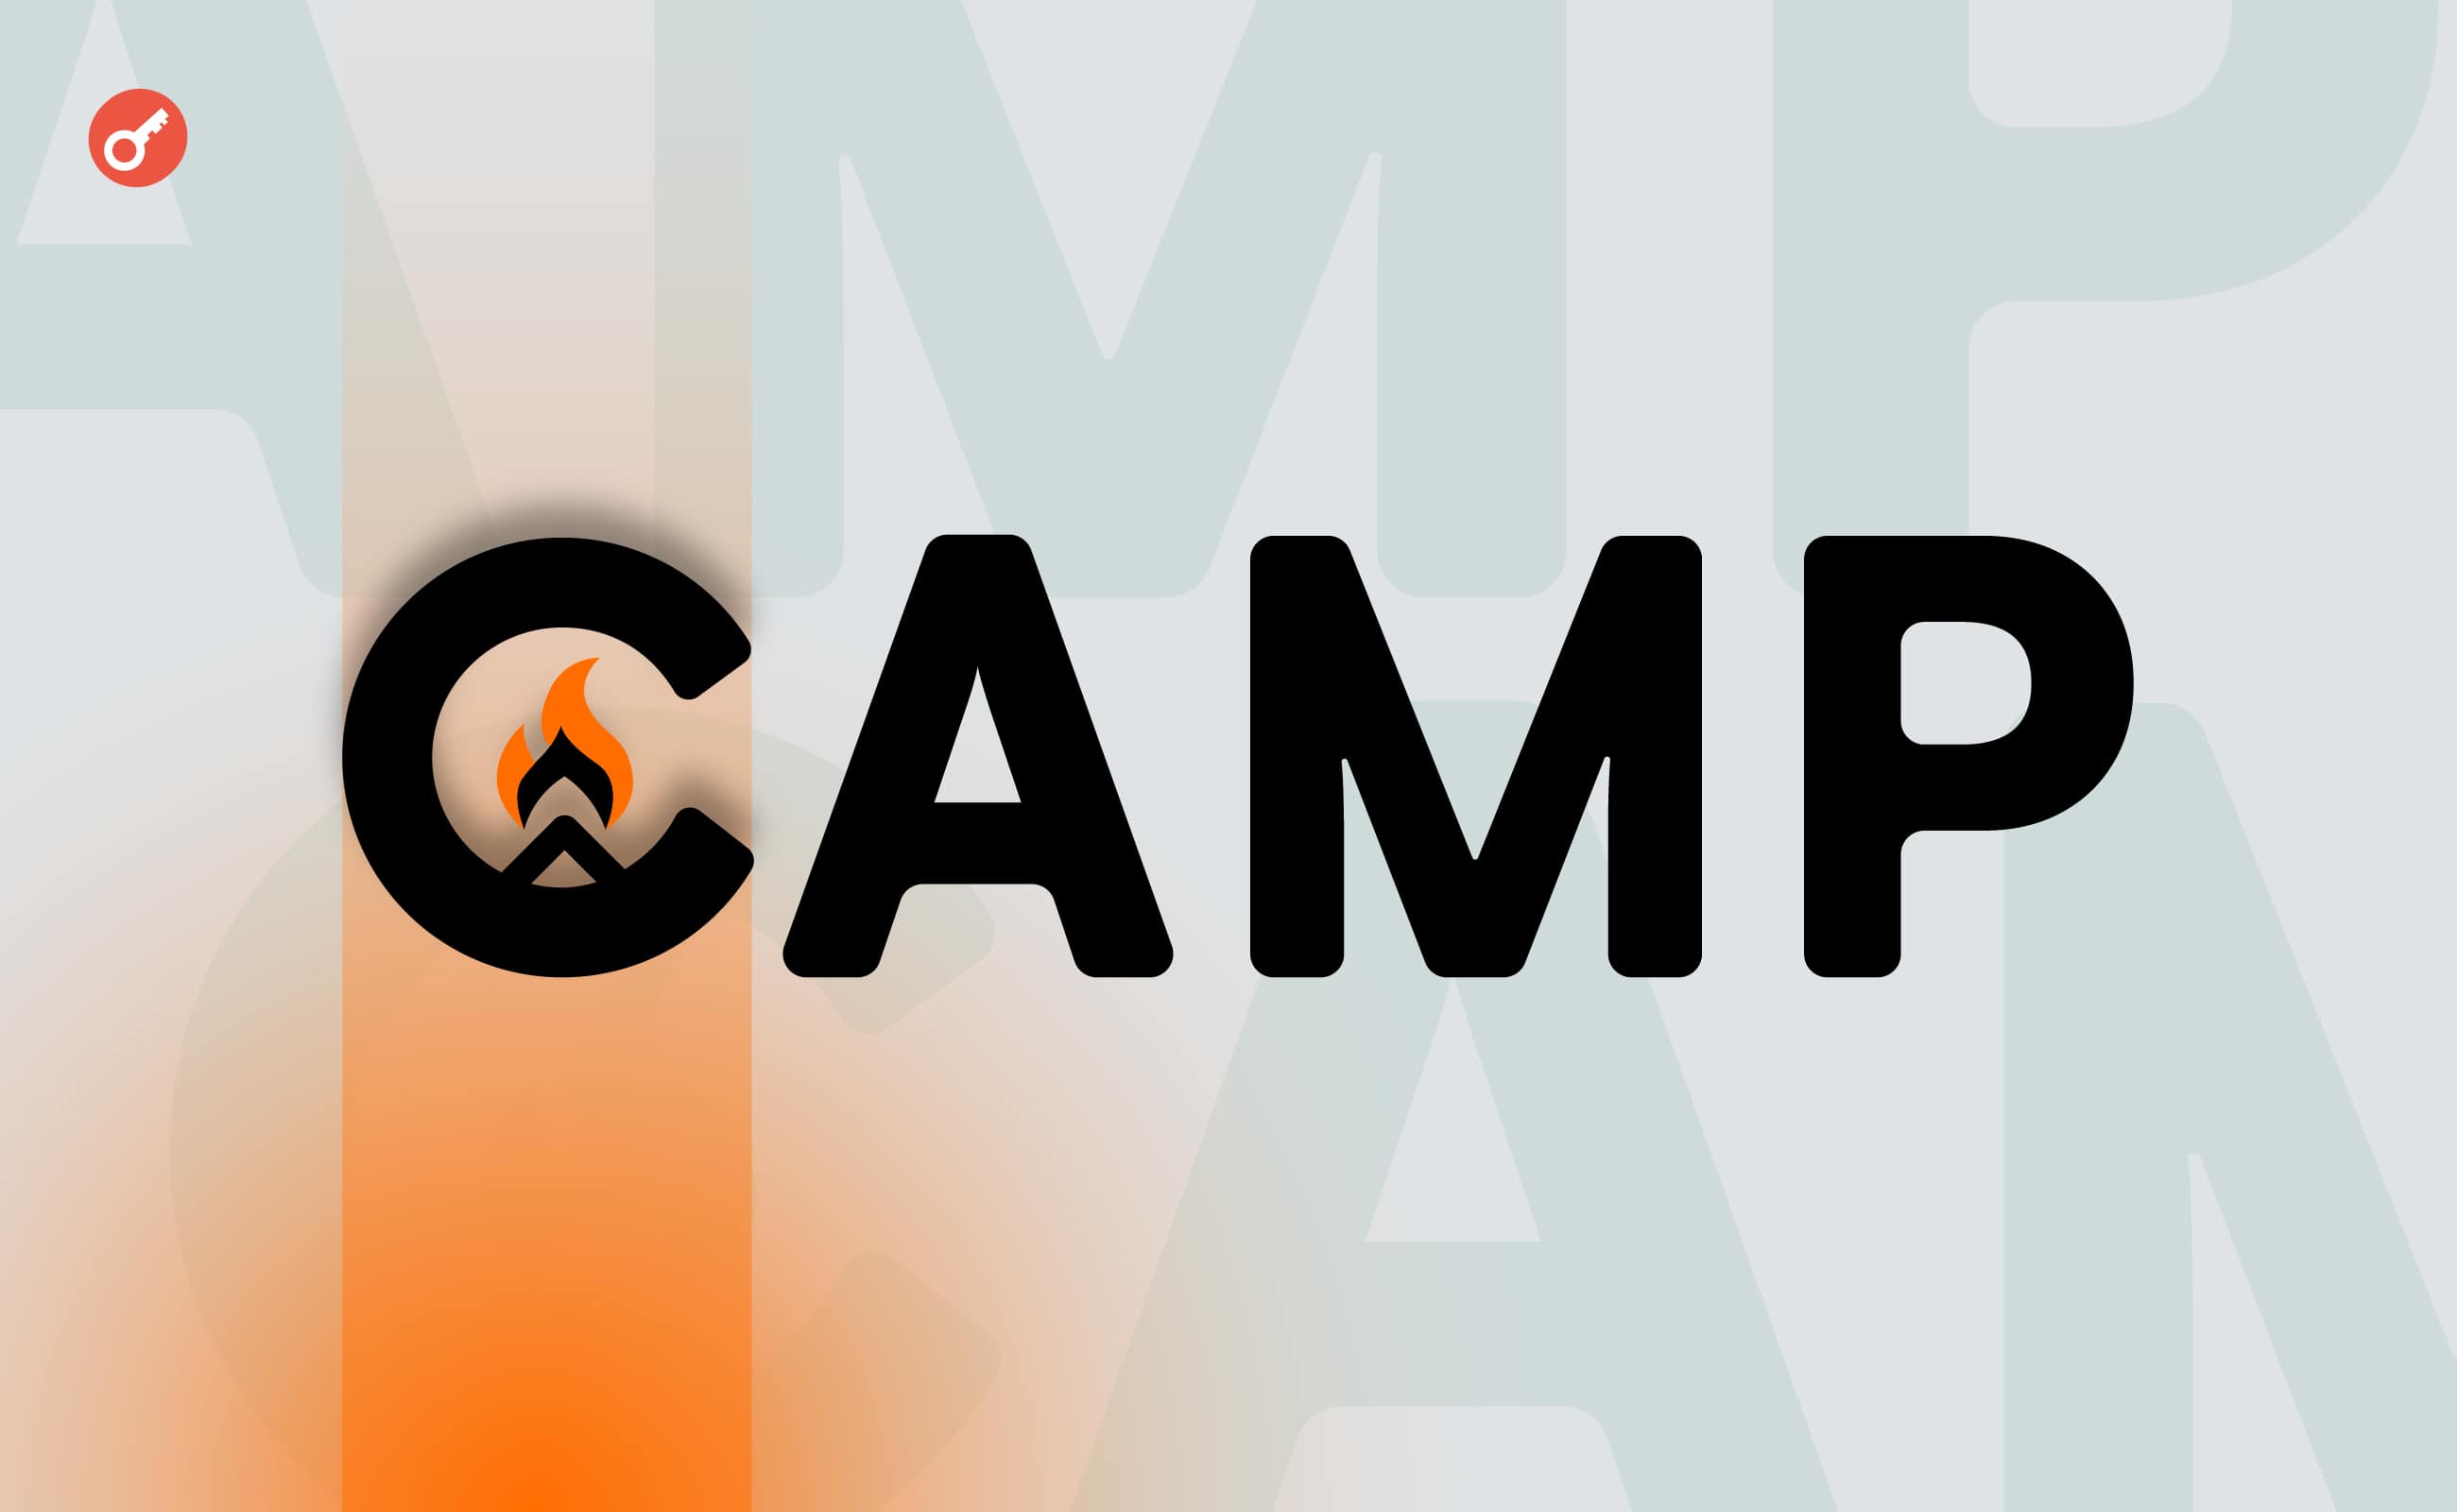 Camp Network推出一款测试网游戏：开启互动Web3体验新